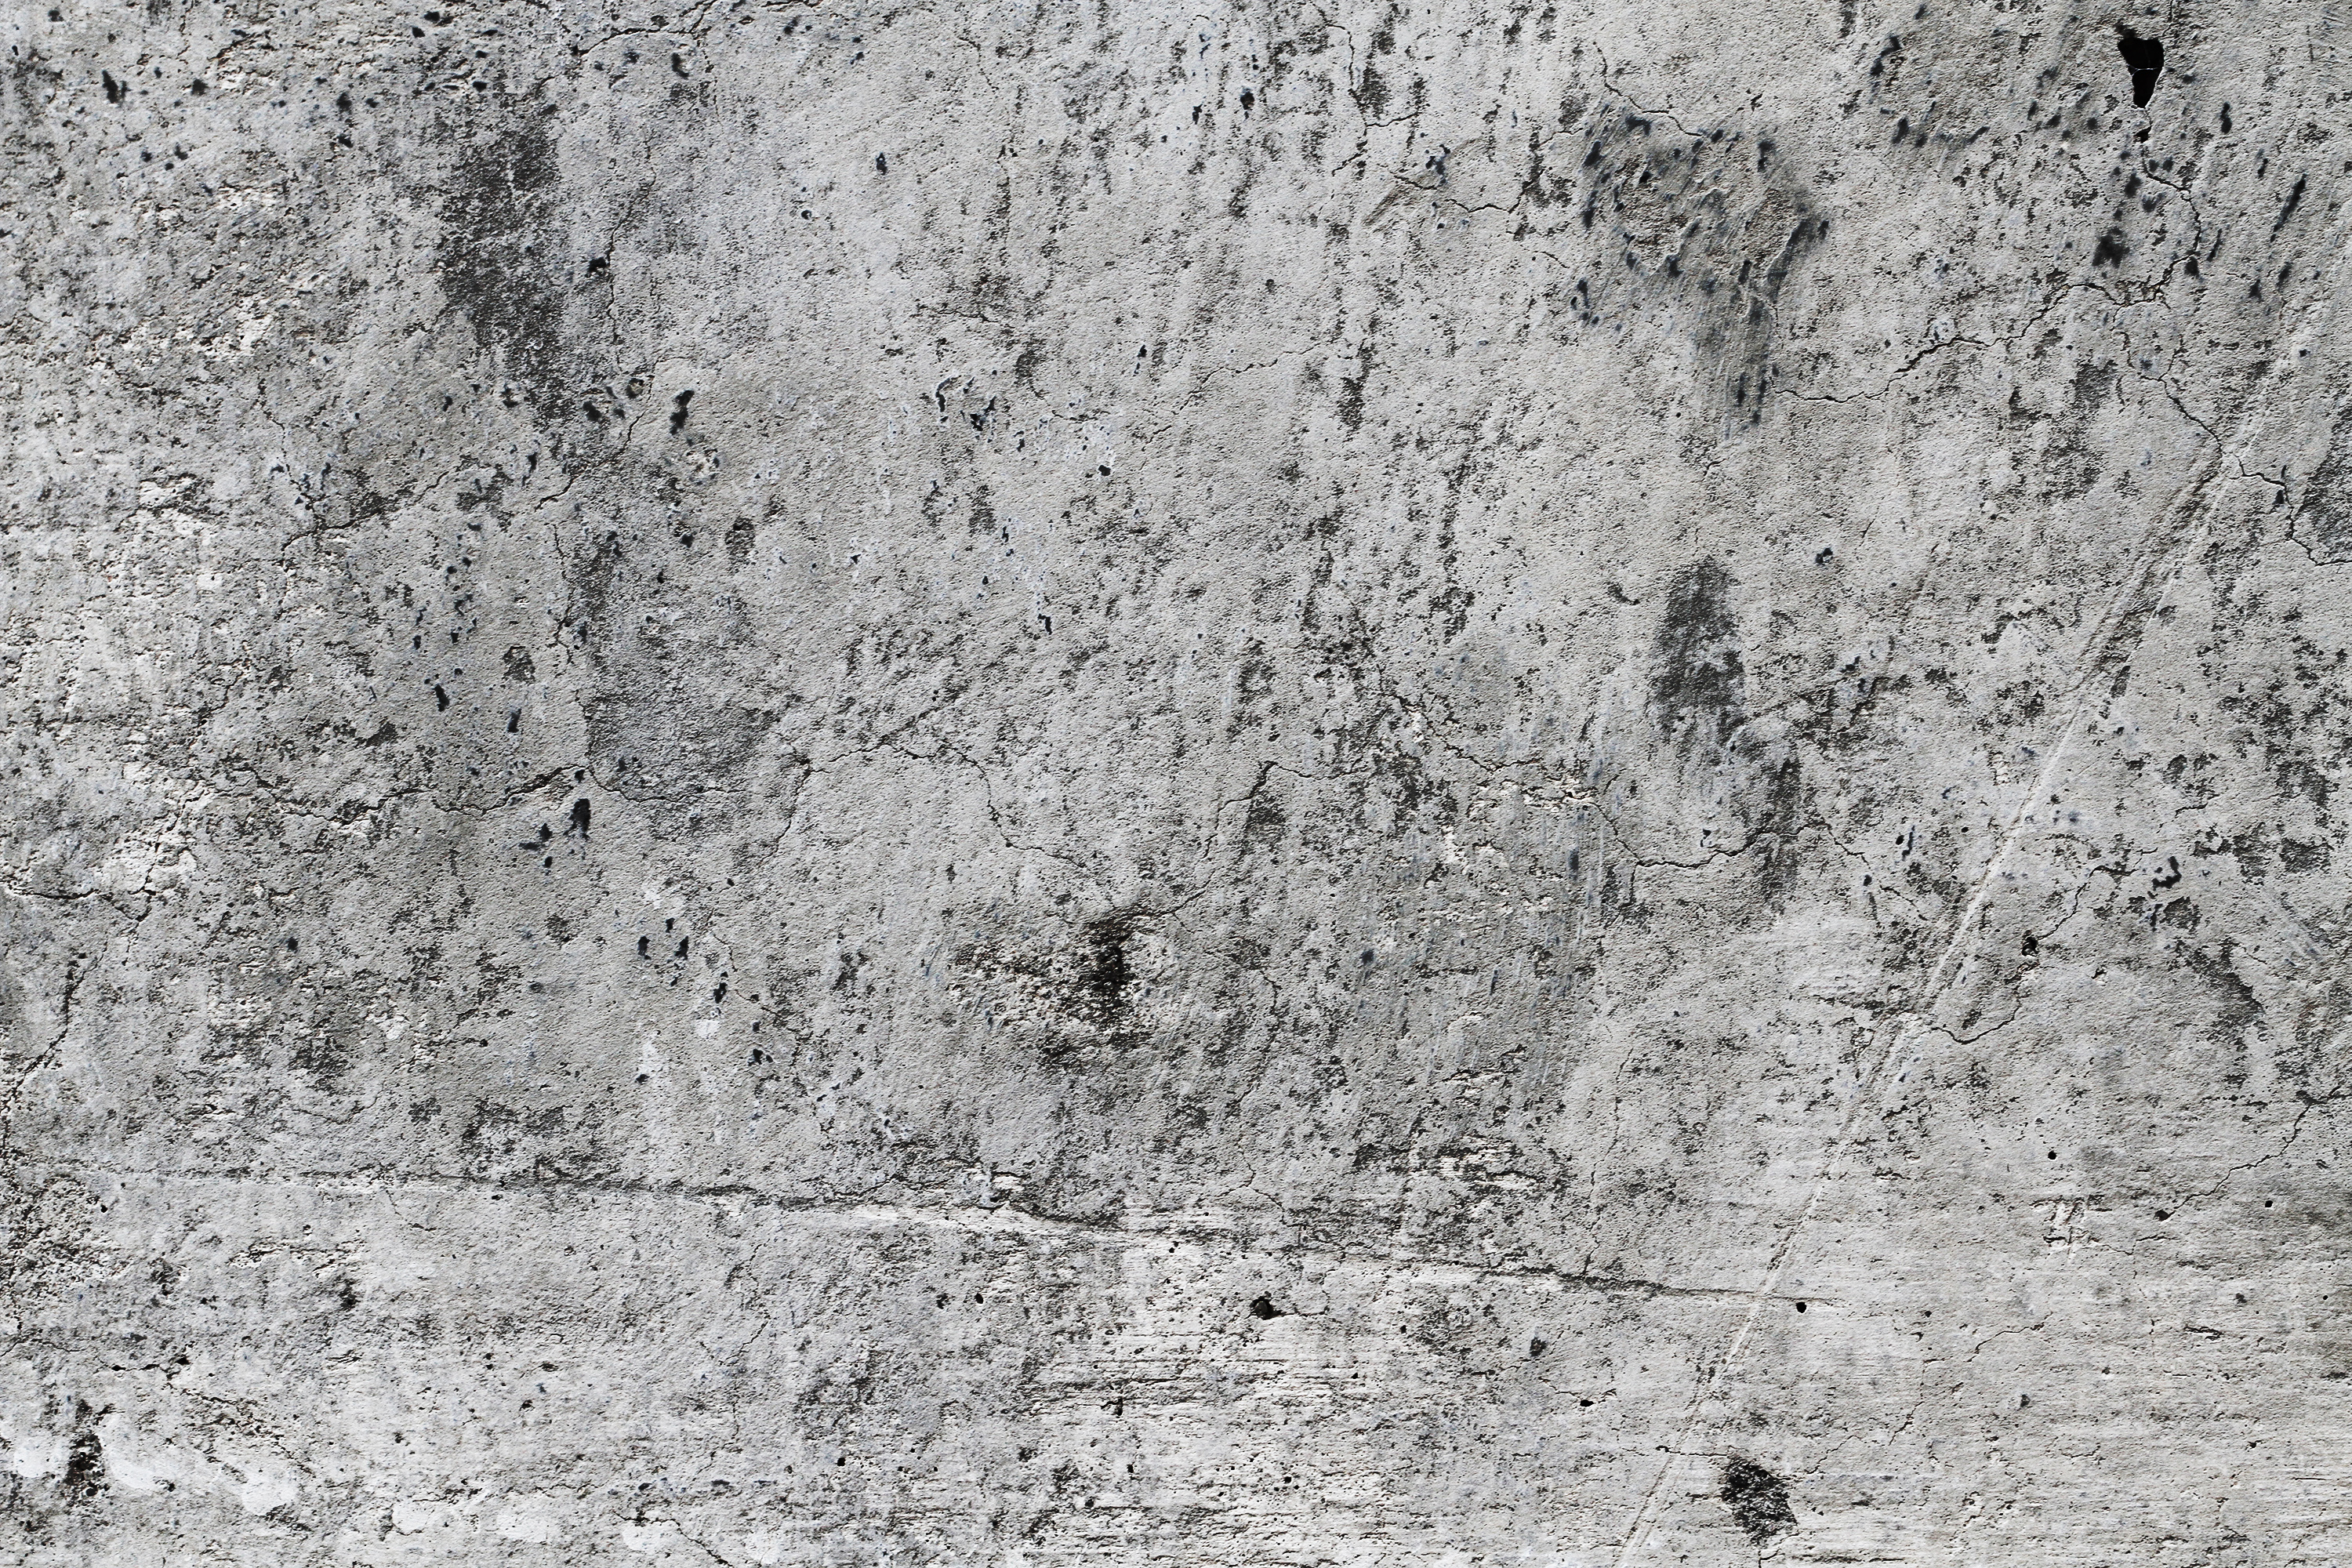 Worn concrete wall texture photo